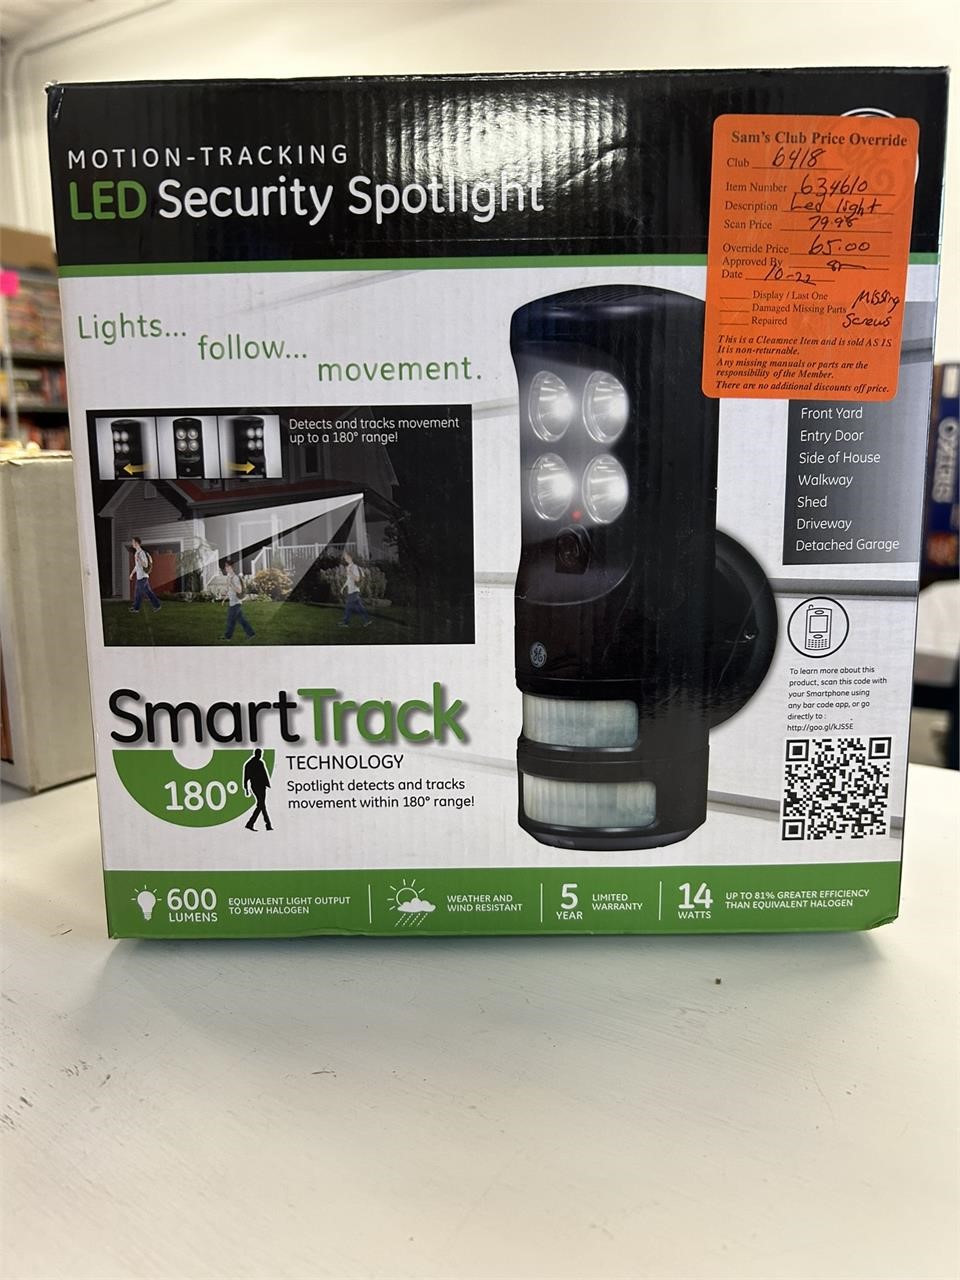 LED Motion-Tracking Security Spotlight